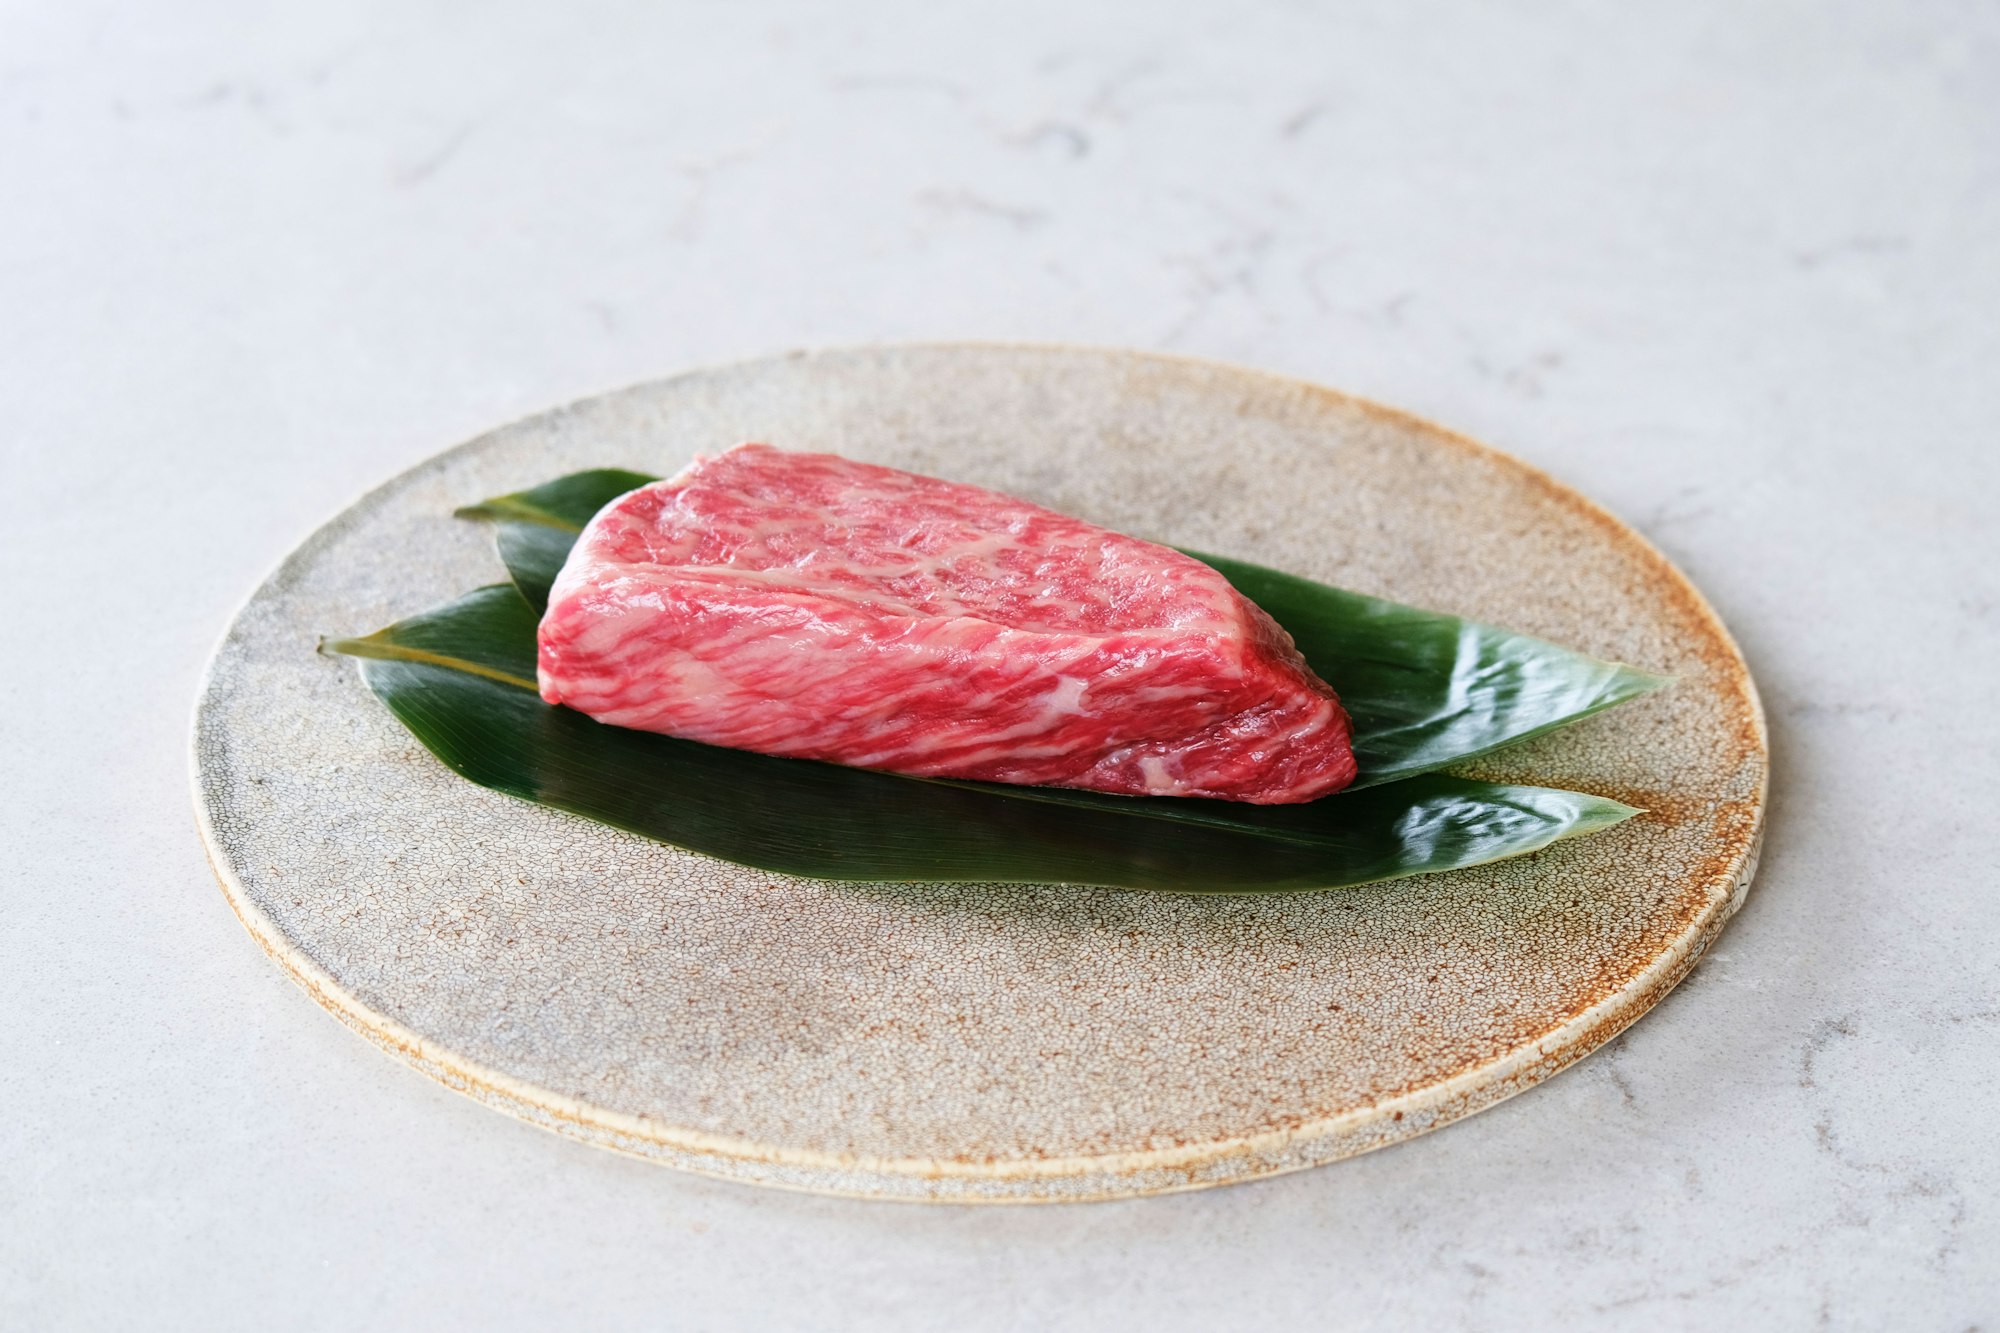 Bisho Beef#1 @PETAL Kamakura
https://petal-web-shop.com/